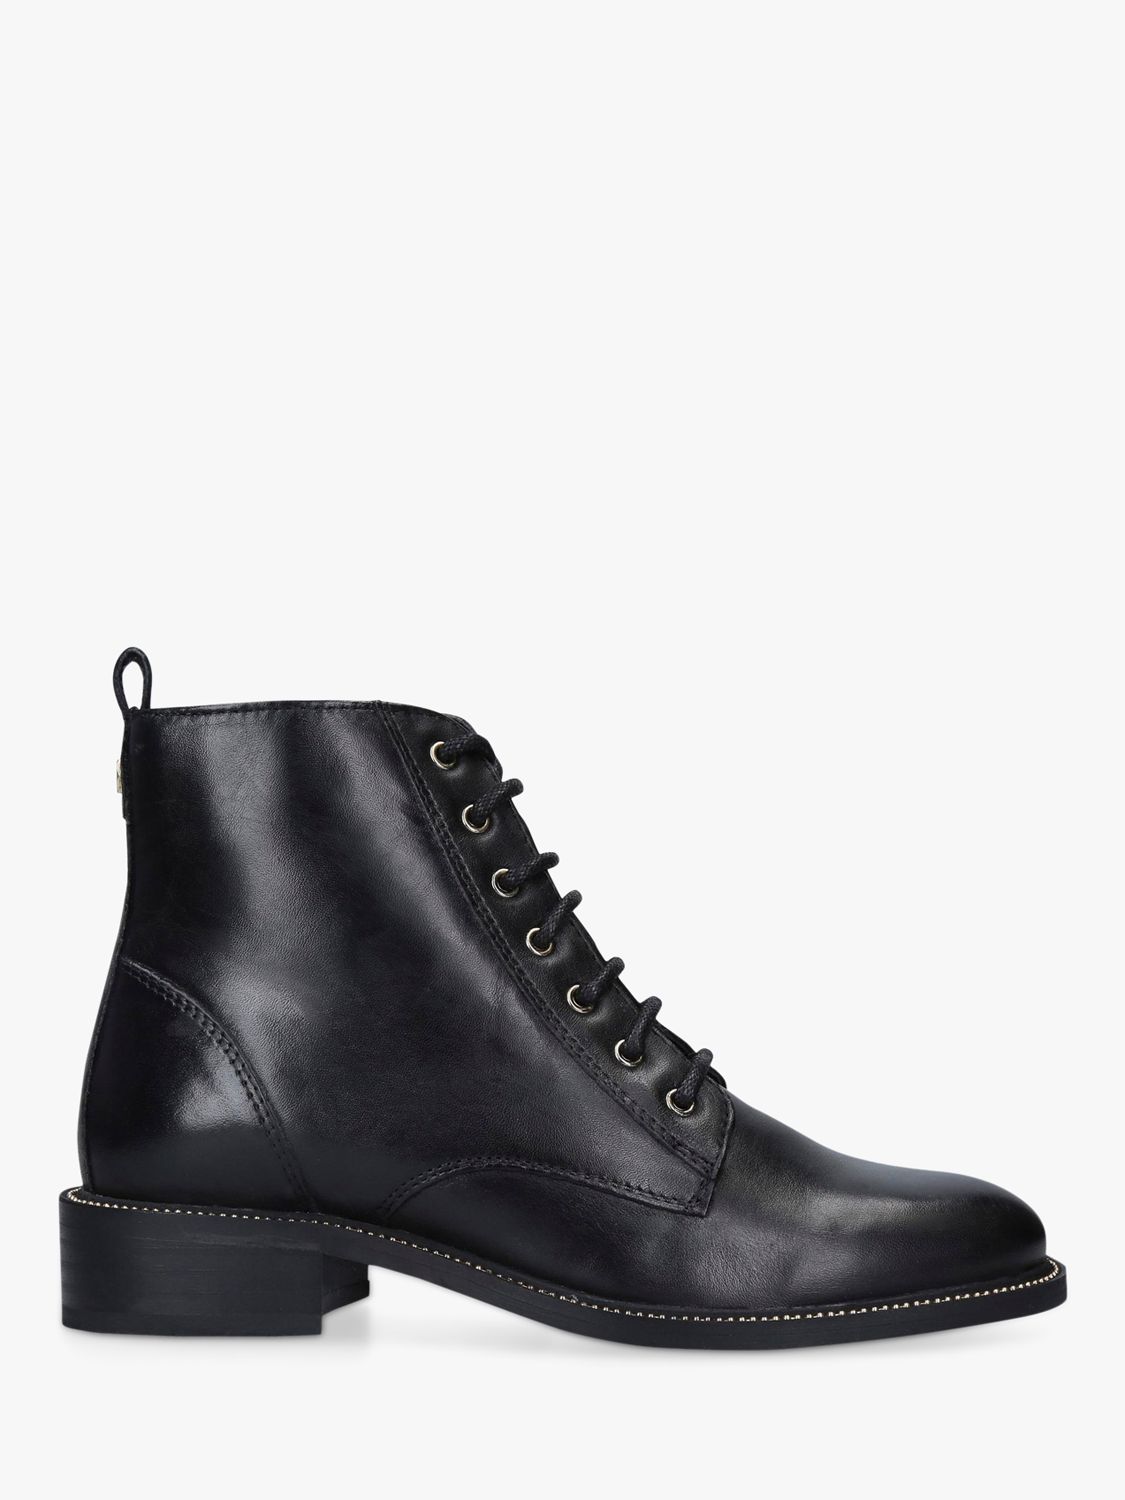 Carvela Spike Stud Detail Leather Ankle Boots, Black at John Lewis ...